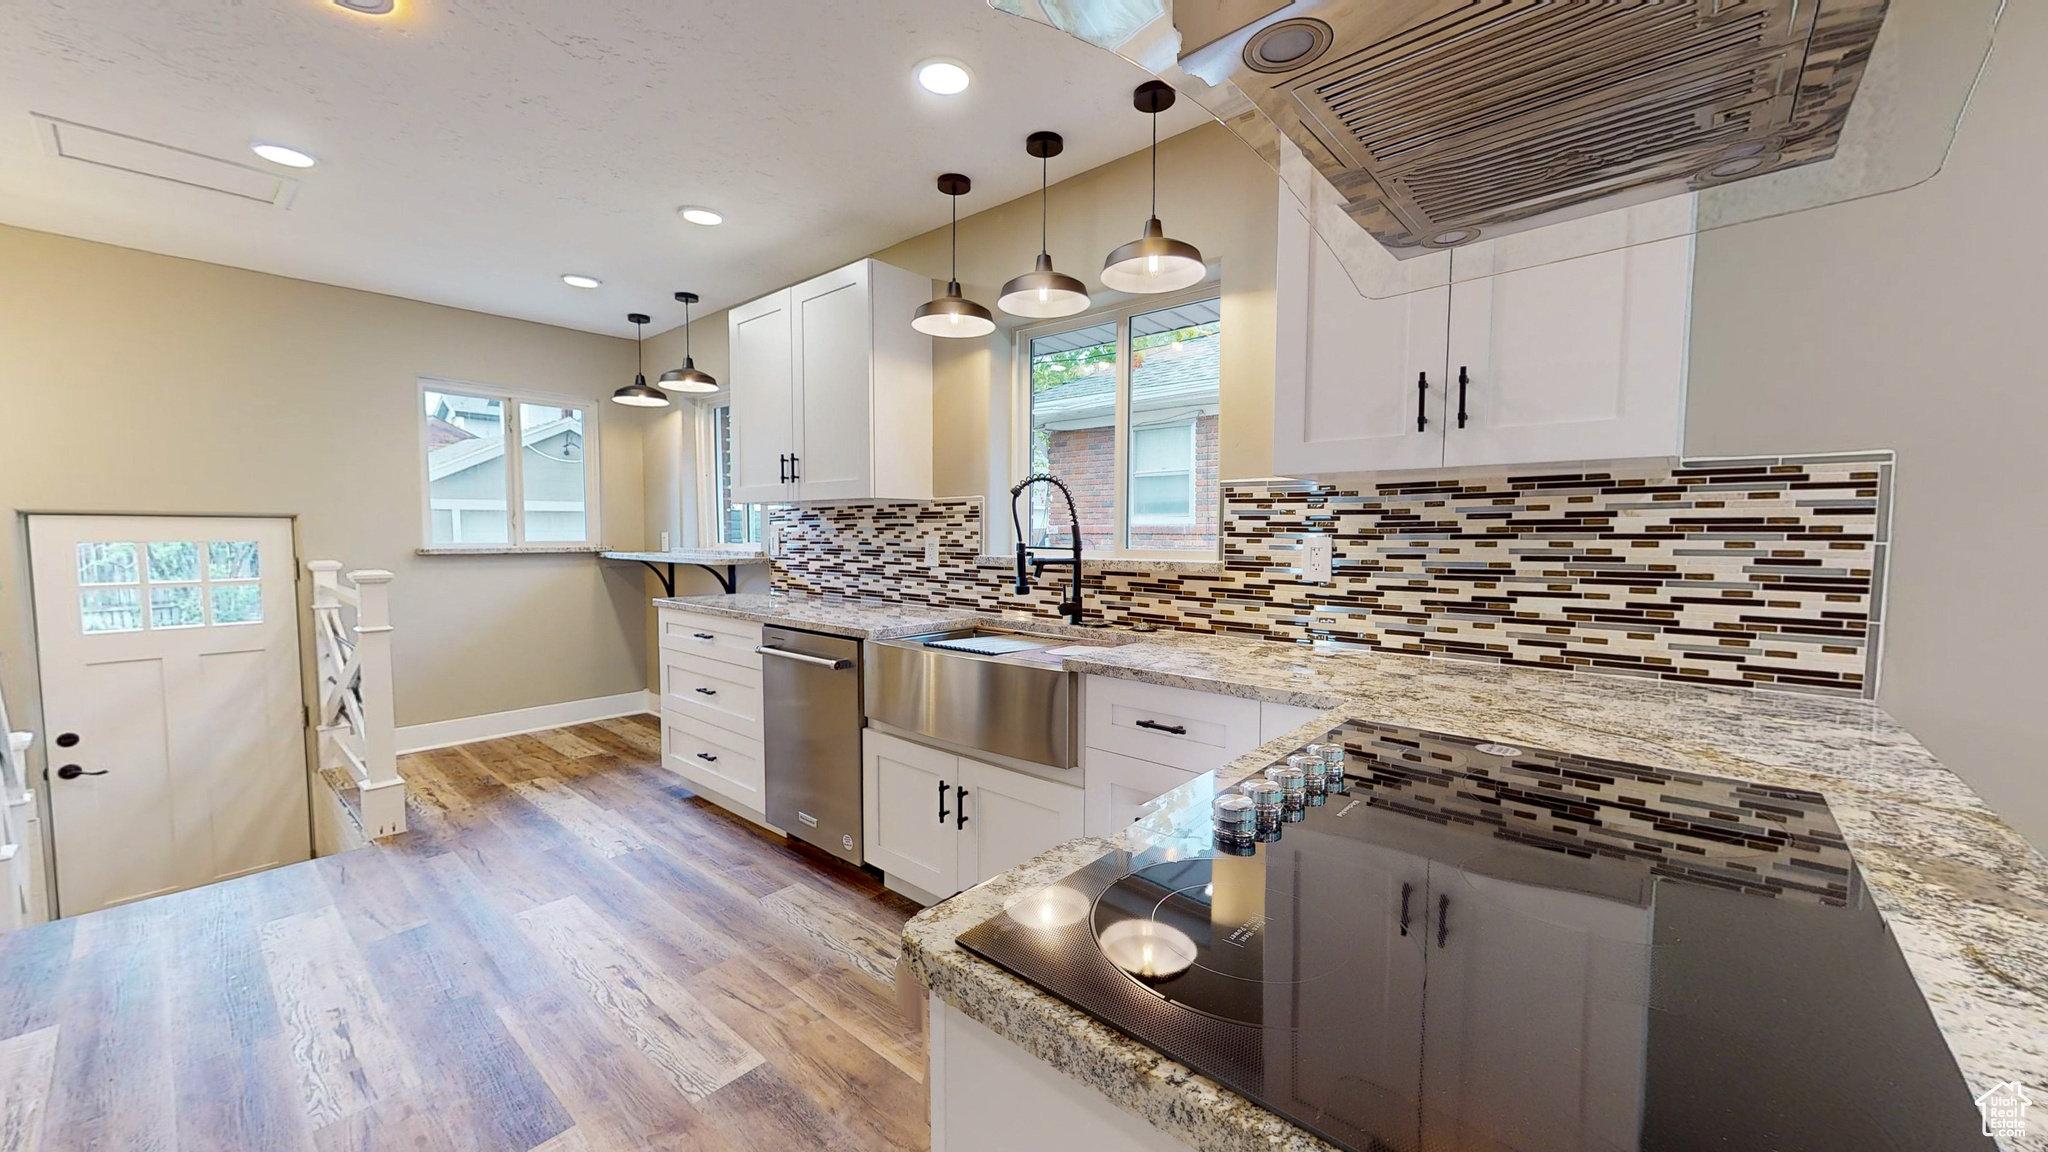 Kitchen featuring white cabinets, sink, dishwasher, backsplash, and hanging light fixtures